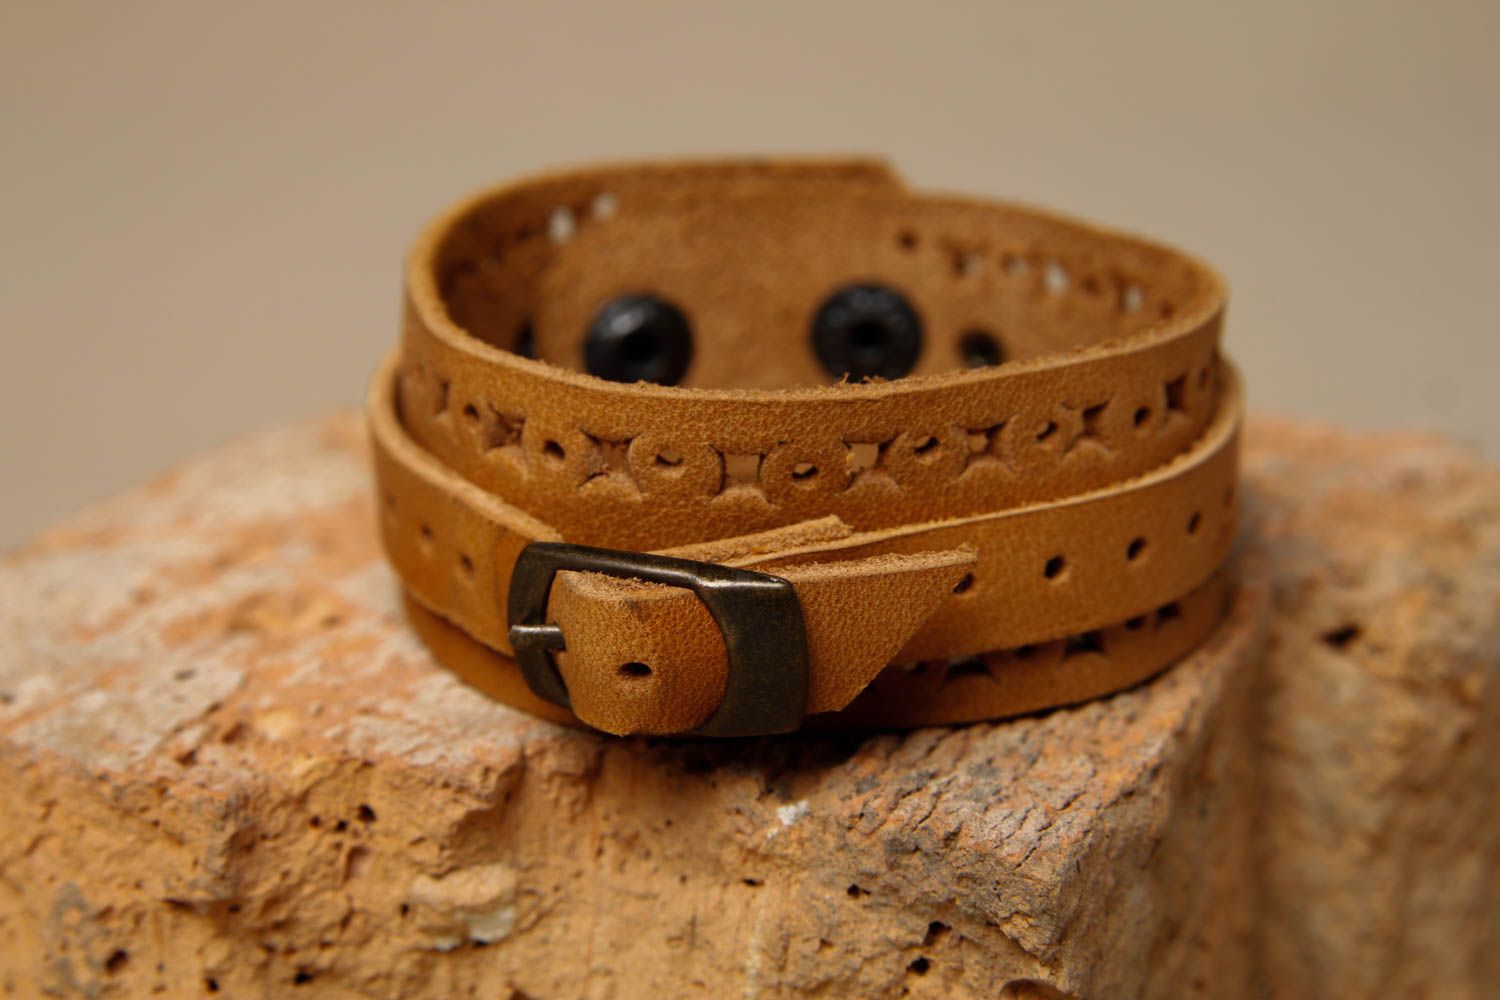 Handmade leather wrist bracelet fashion trends artisan jewelry designs photo 1